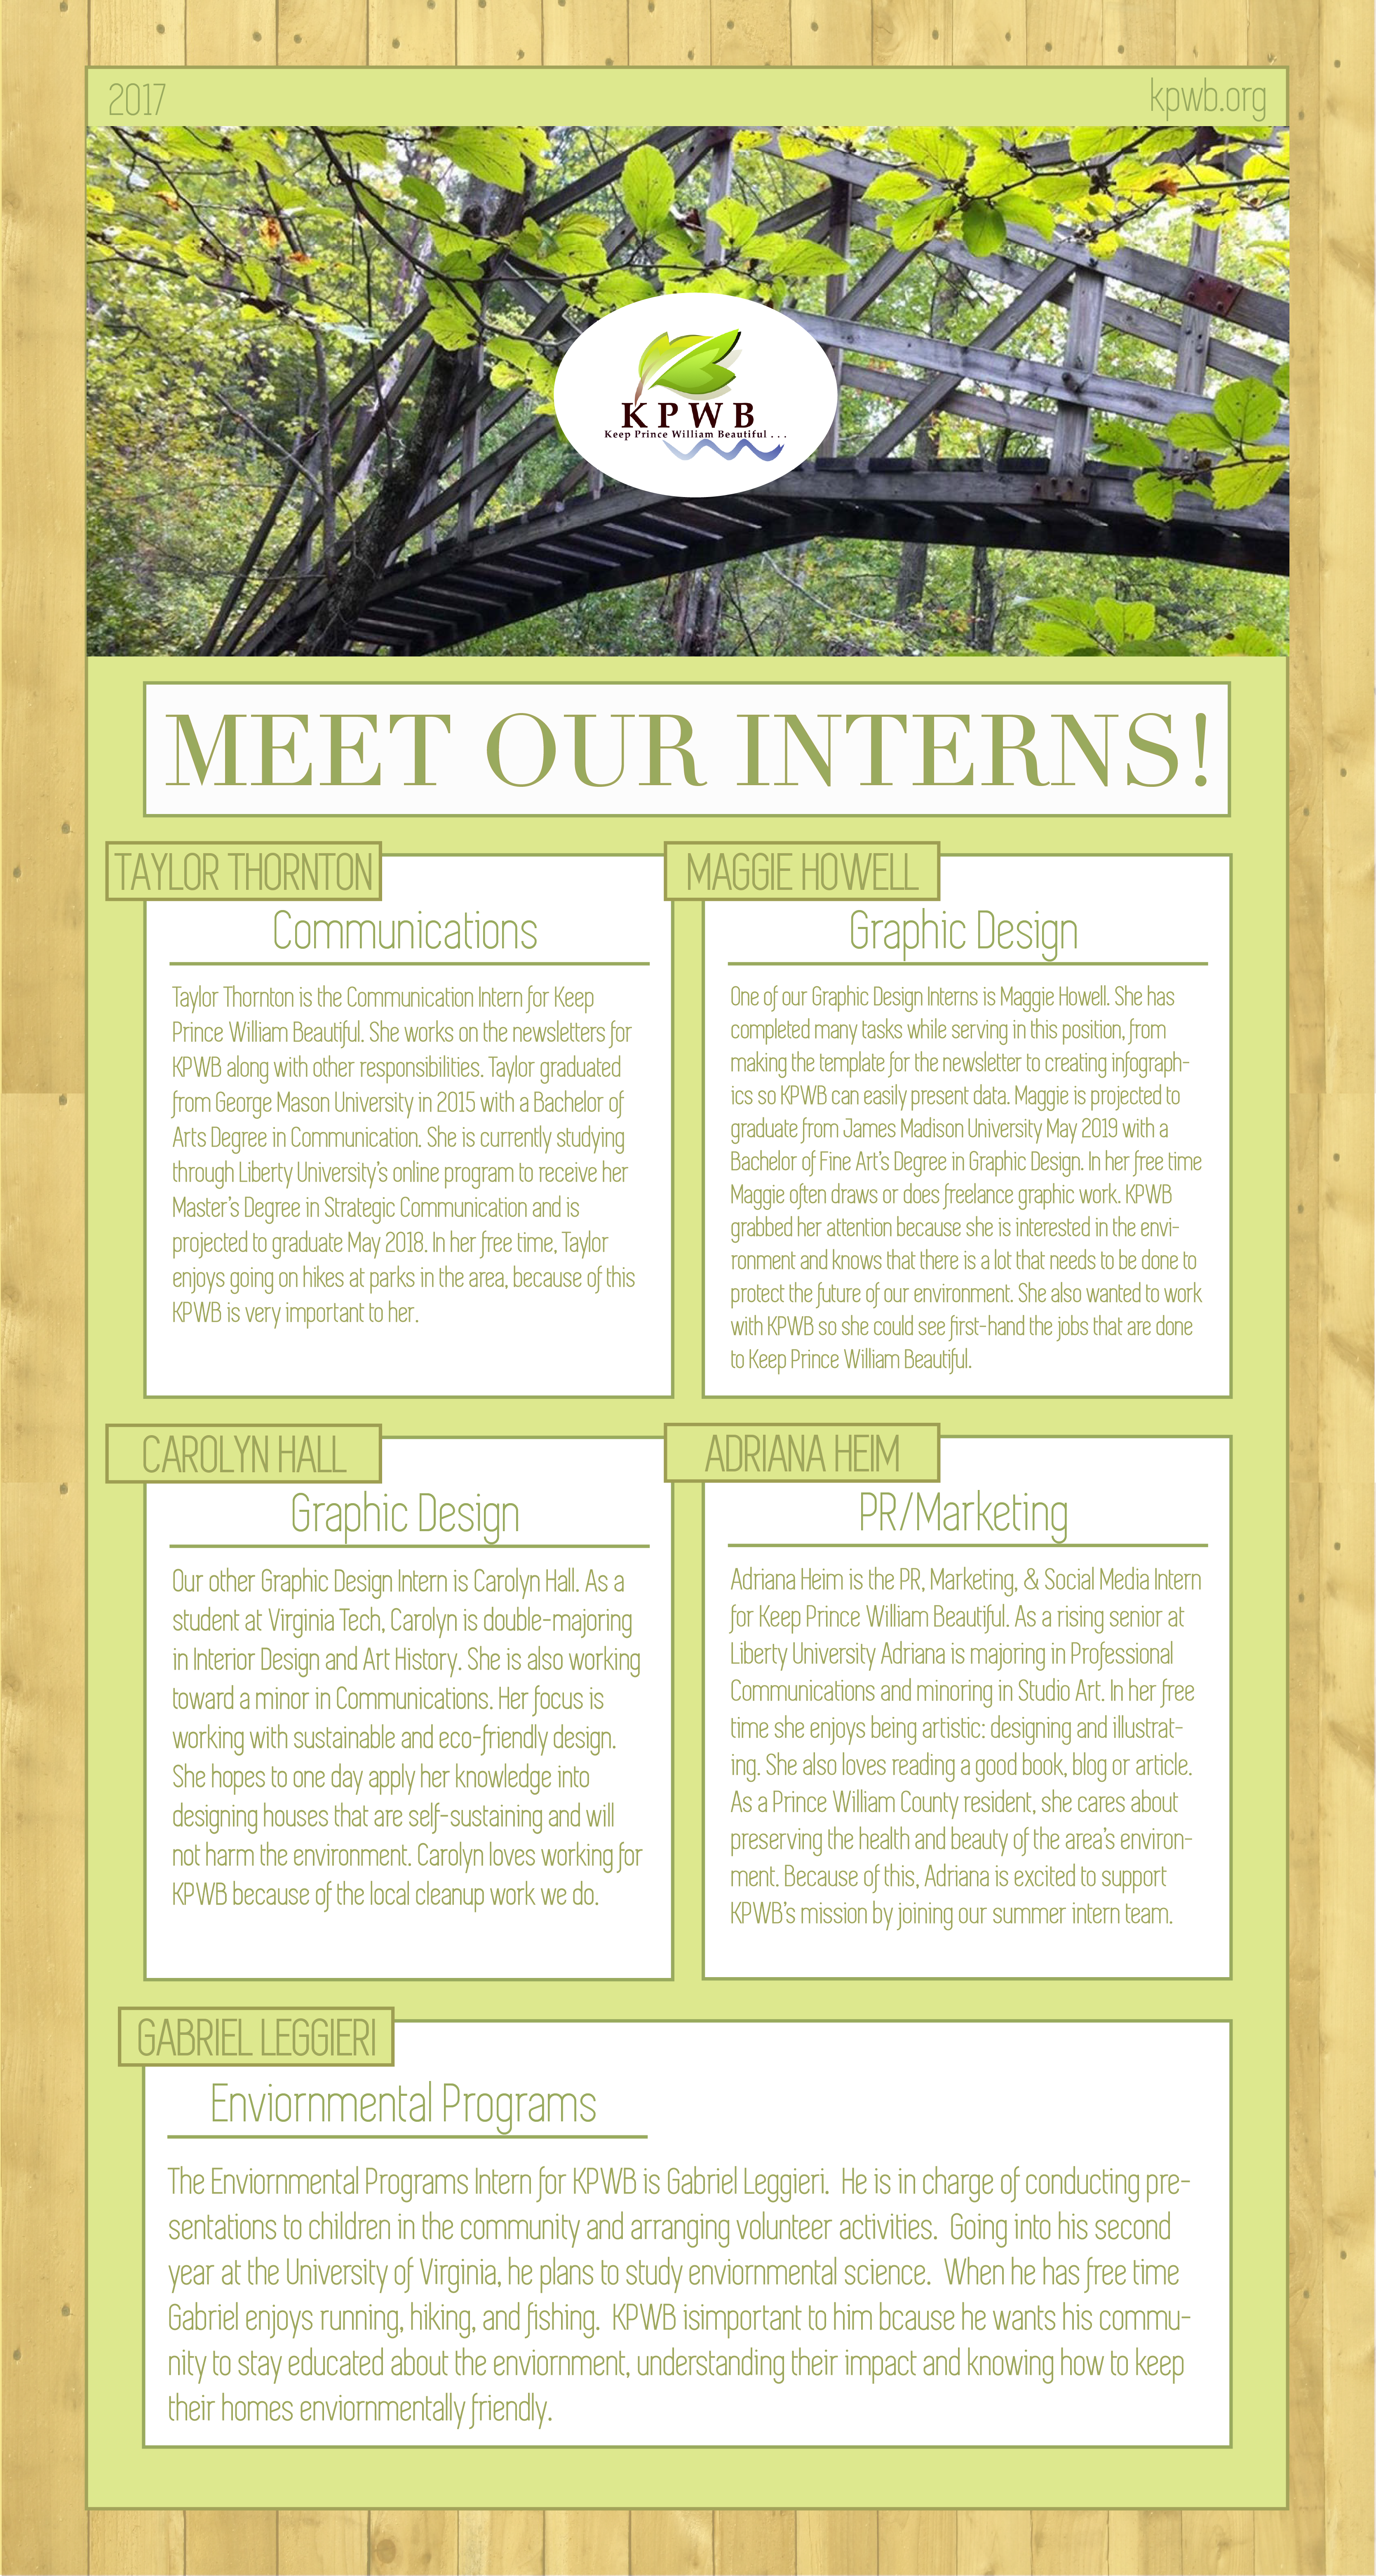 Meet The KPWB Interns!